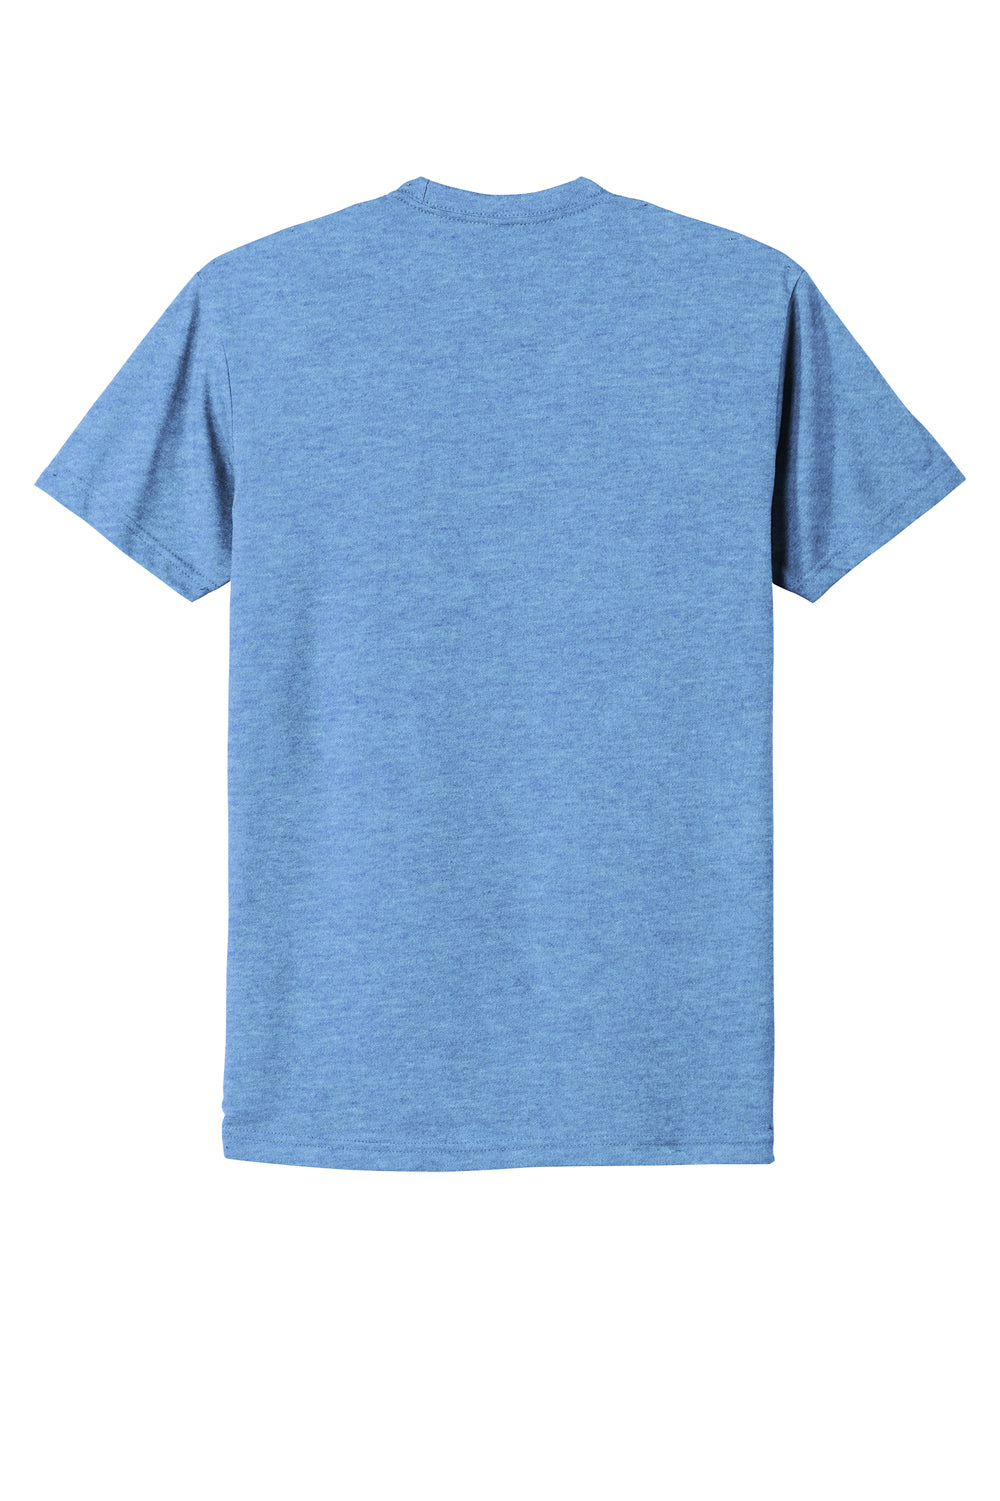 Next Level NL6210/N6210/6210 Mens CVC Jersey Short Sleeve Crewneck T-Shirt Heather Columbia Blue Flat Back